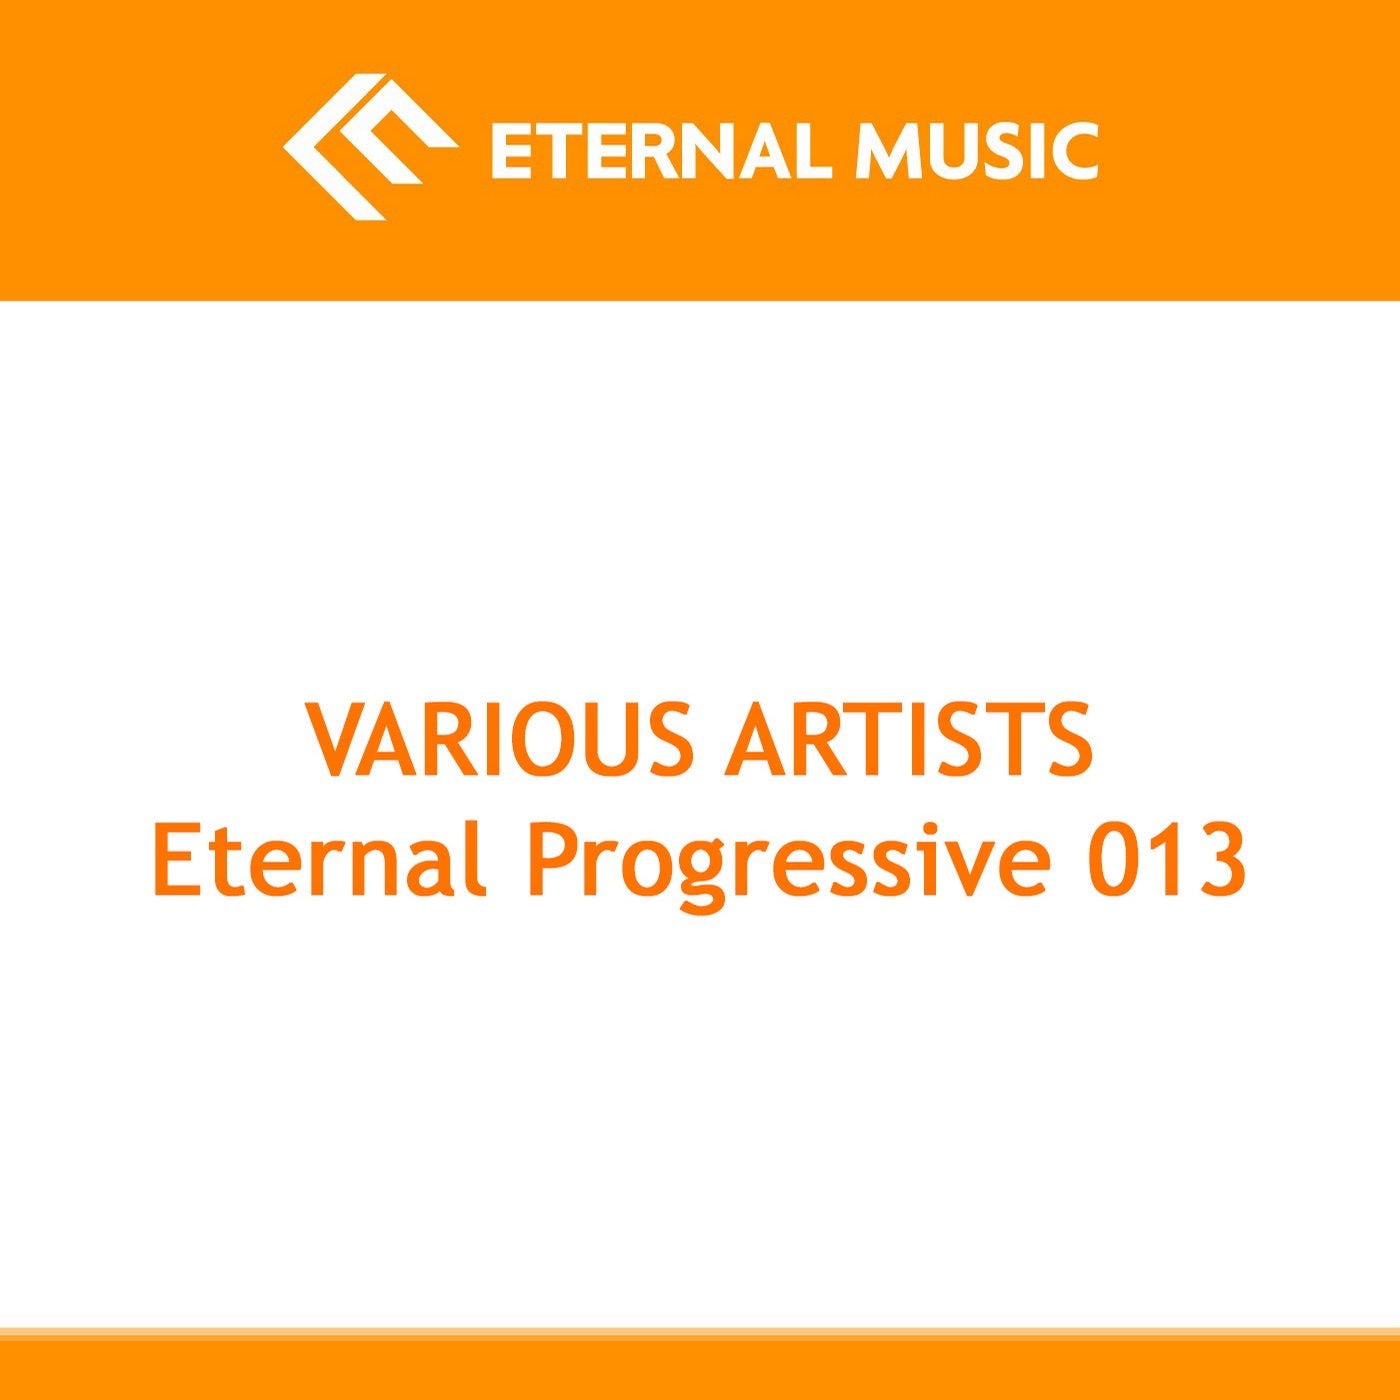 Eternal Progressive 013